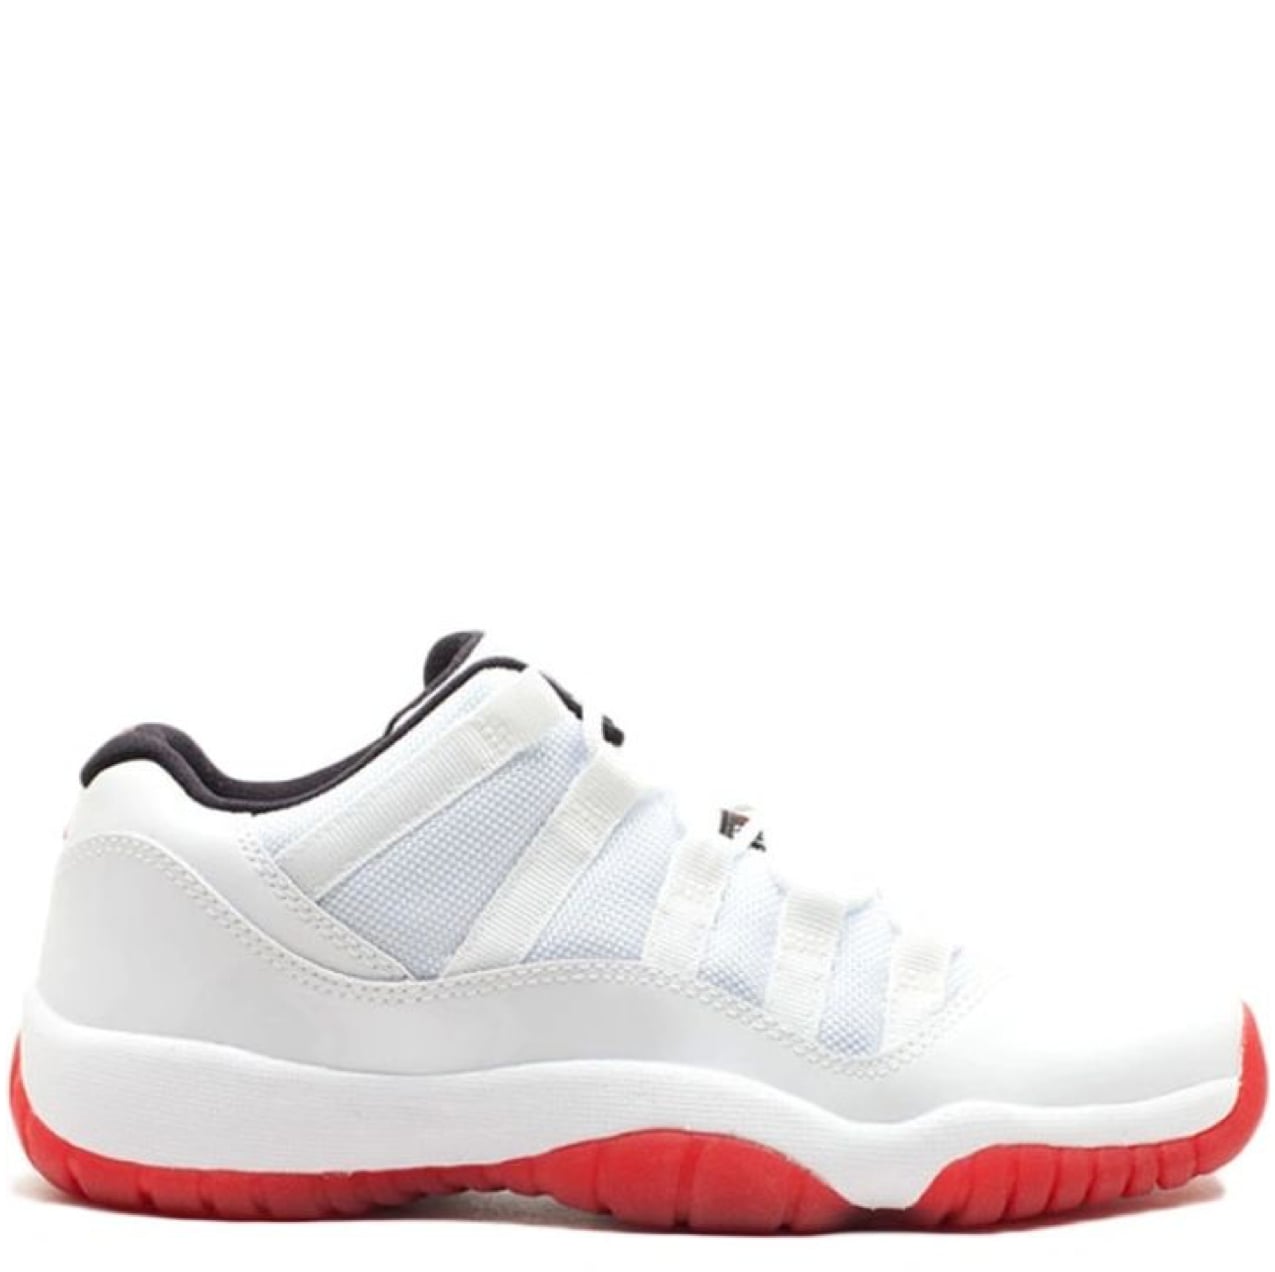 Rent Jordan 11 Retro Low White Varsity Red sneaker